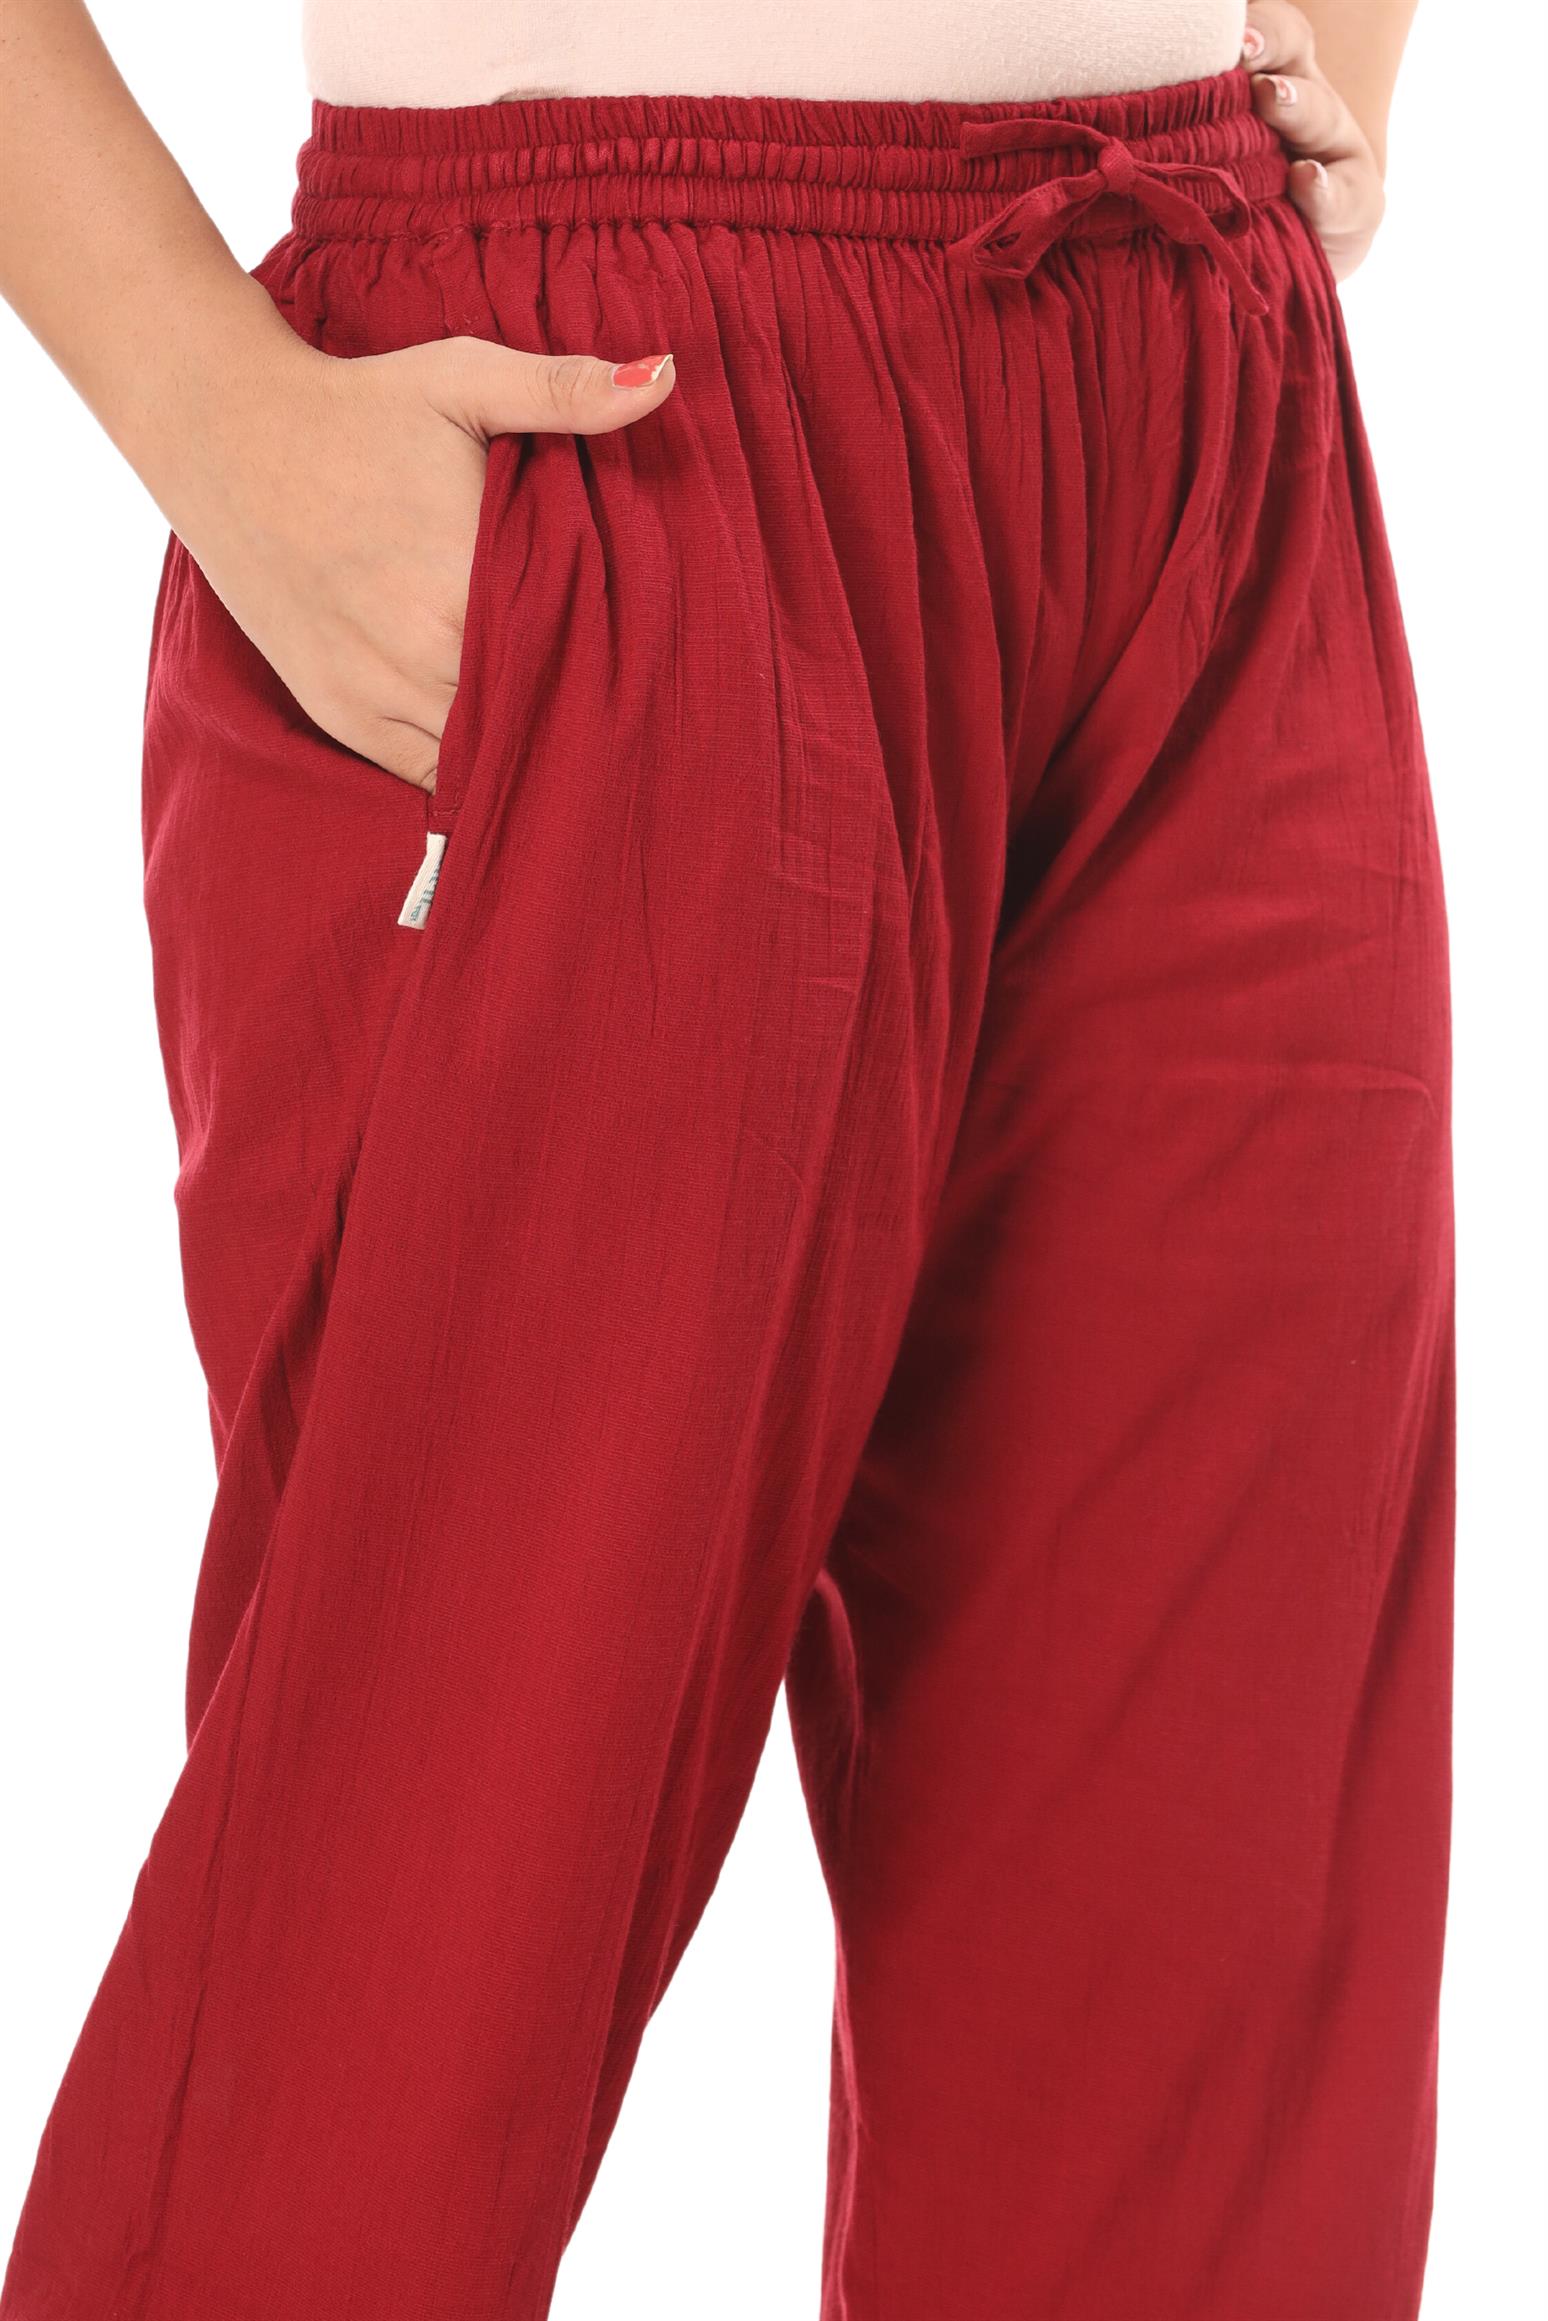 Premium Cotton Lycra Pants with 1 Pocket for Women (Free Size) (Good for  M/L/XL Size)